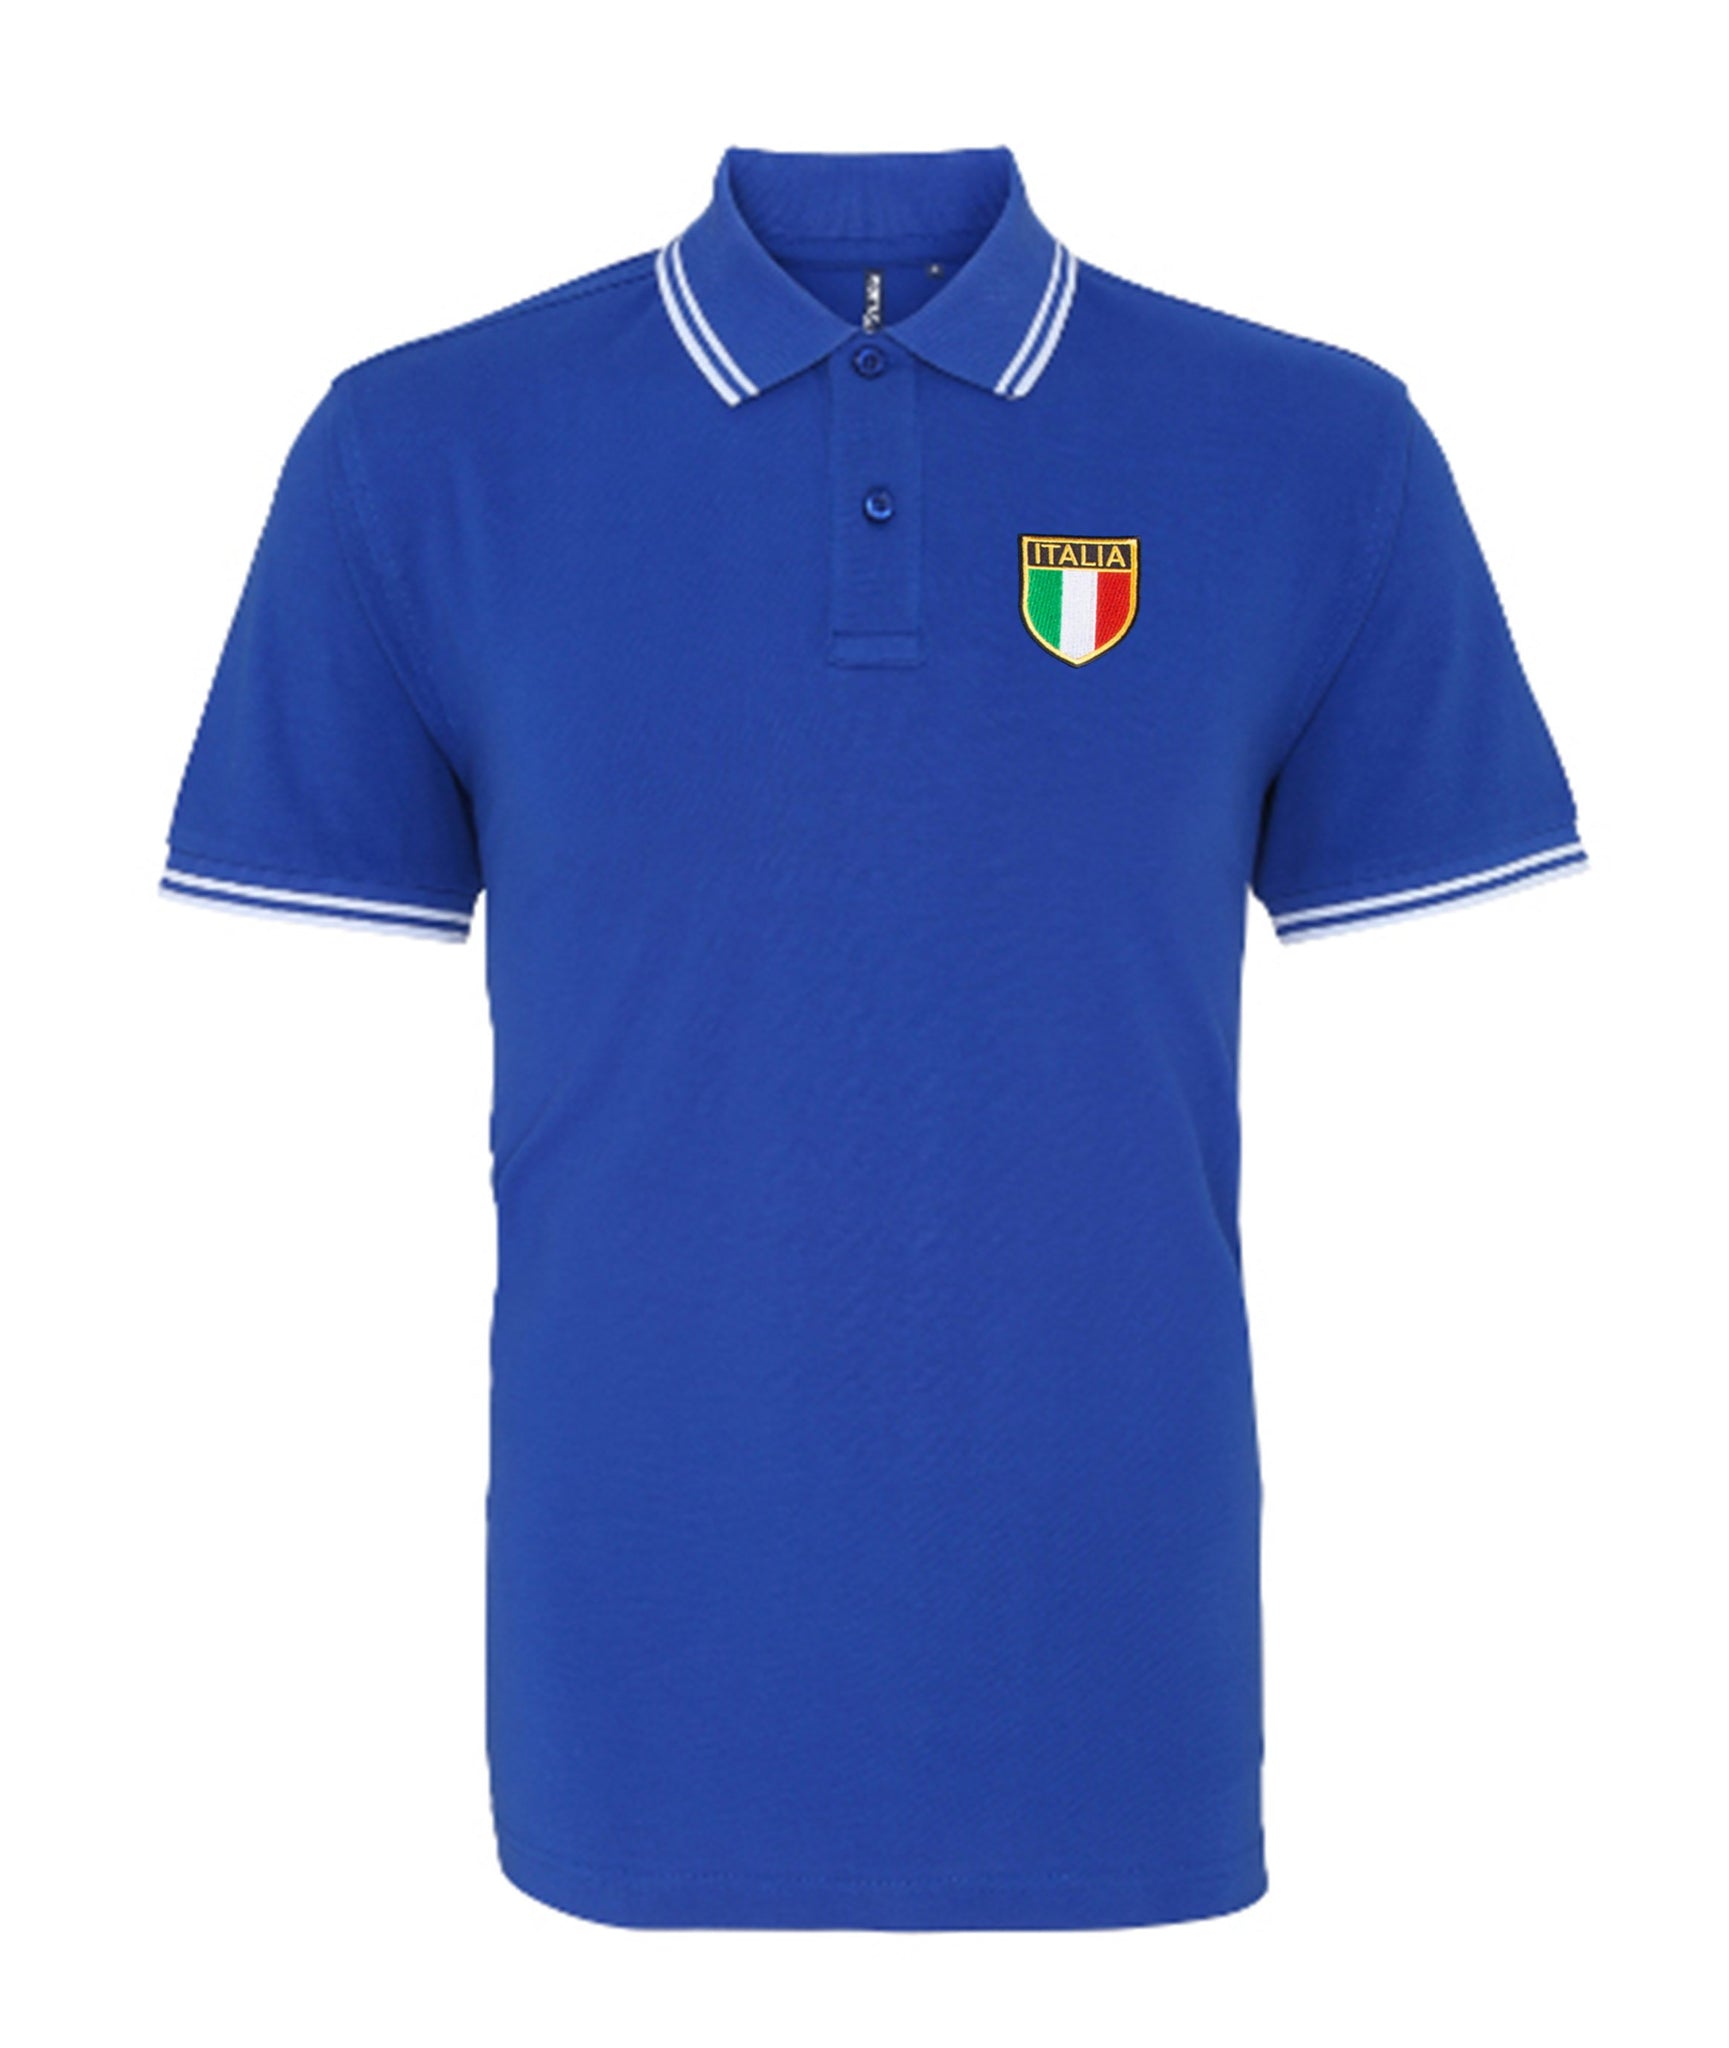 Italy Retro Football Iconic Polo 1960s - Polo